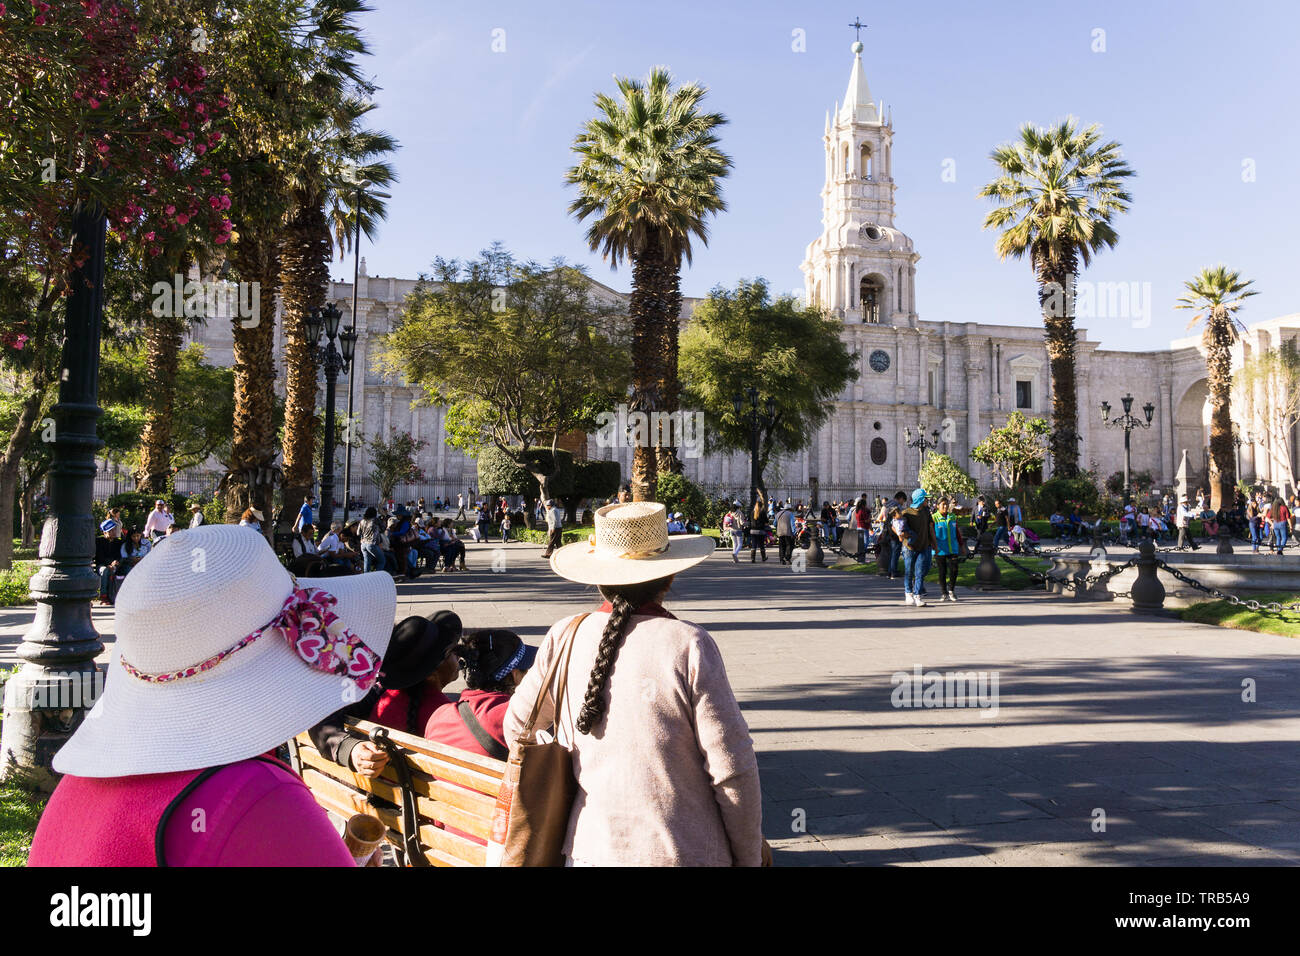 Street scene at Plaza de Armas in Arequipa, Peru. Stock Photo